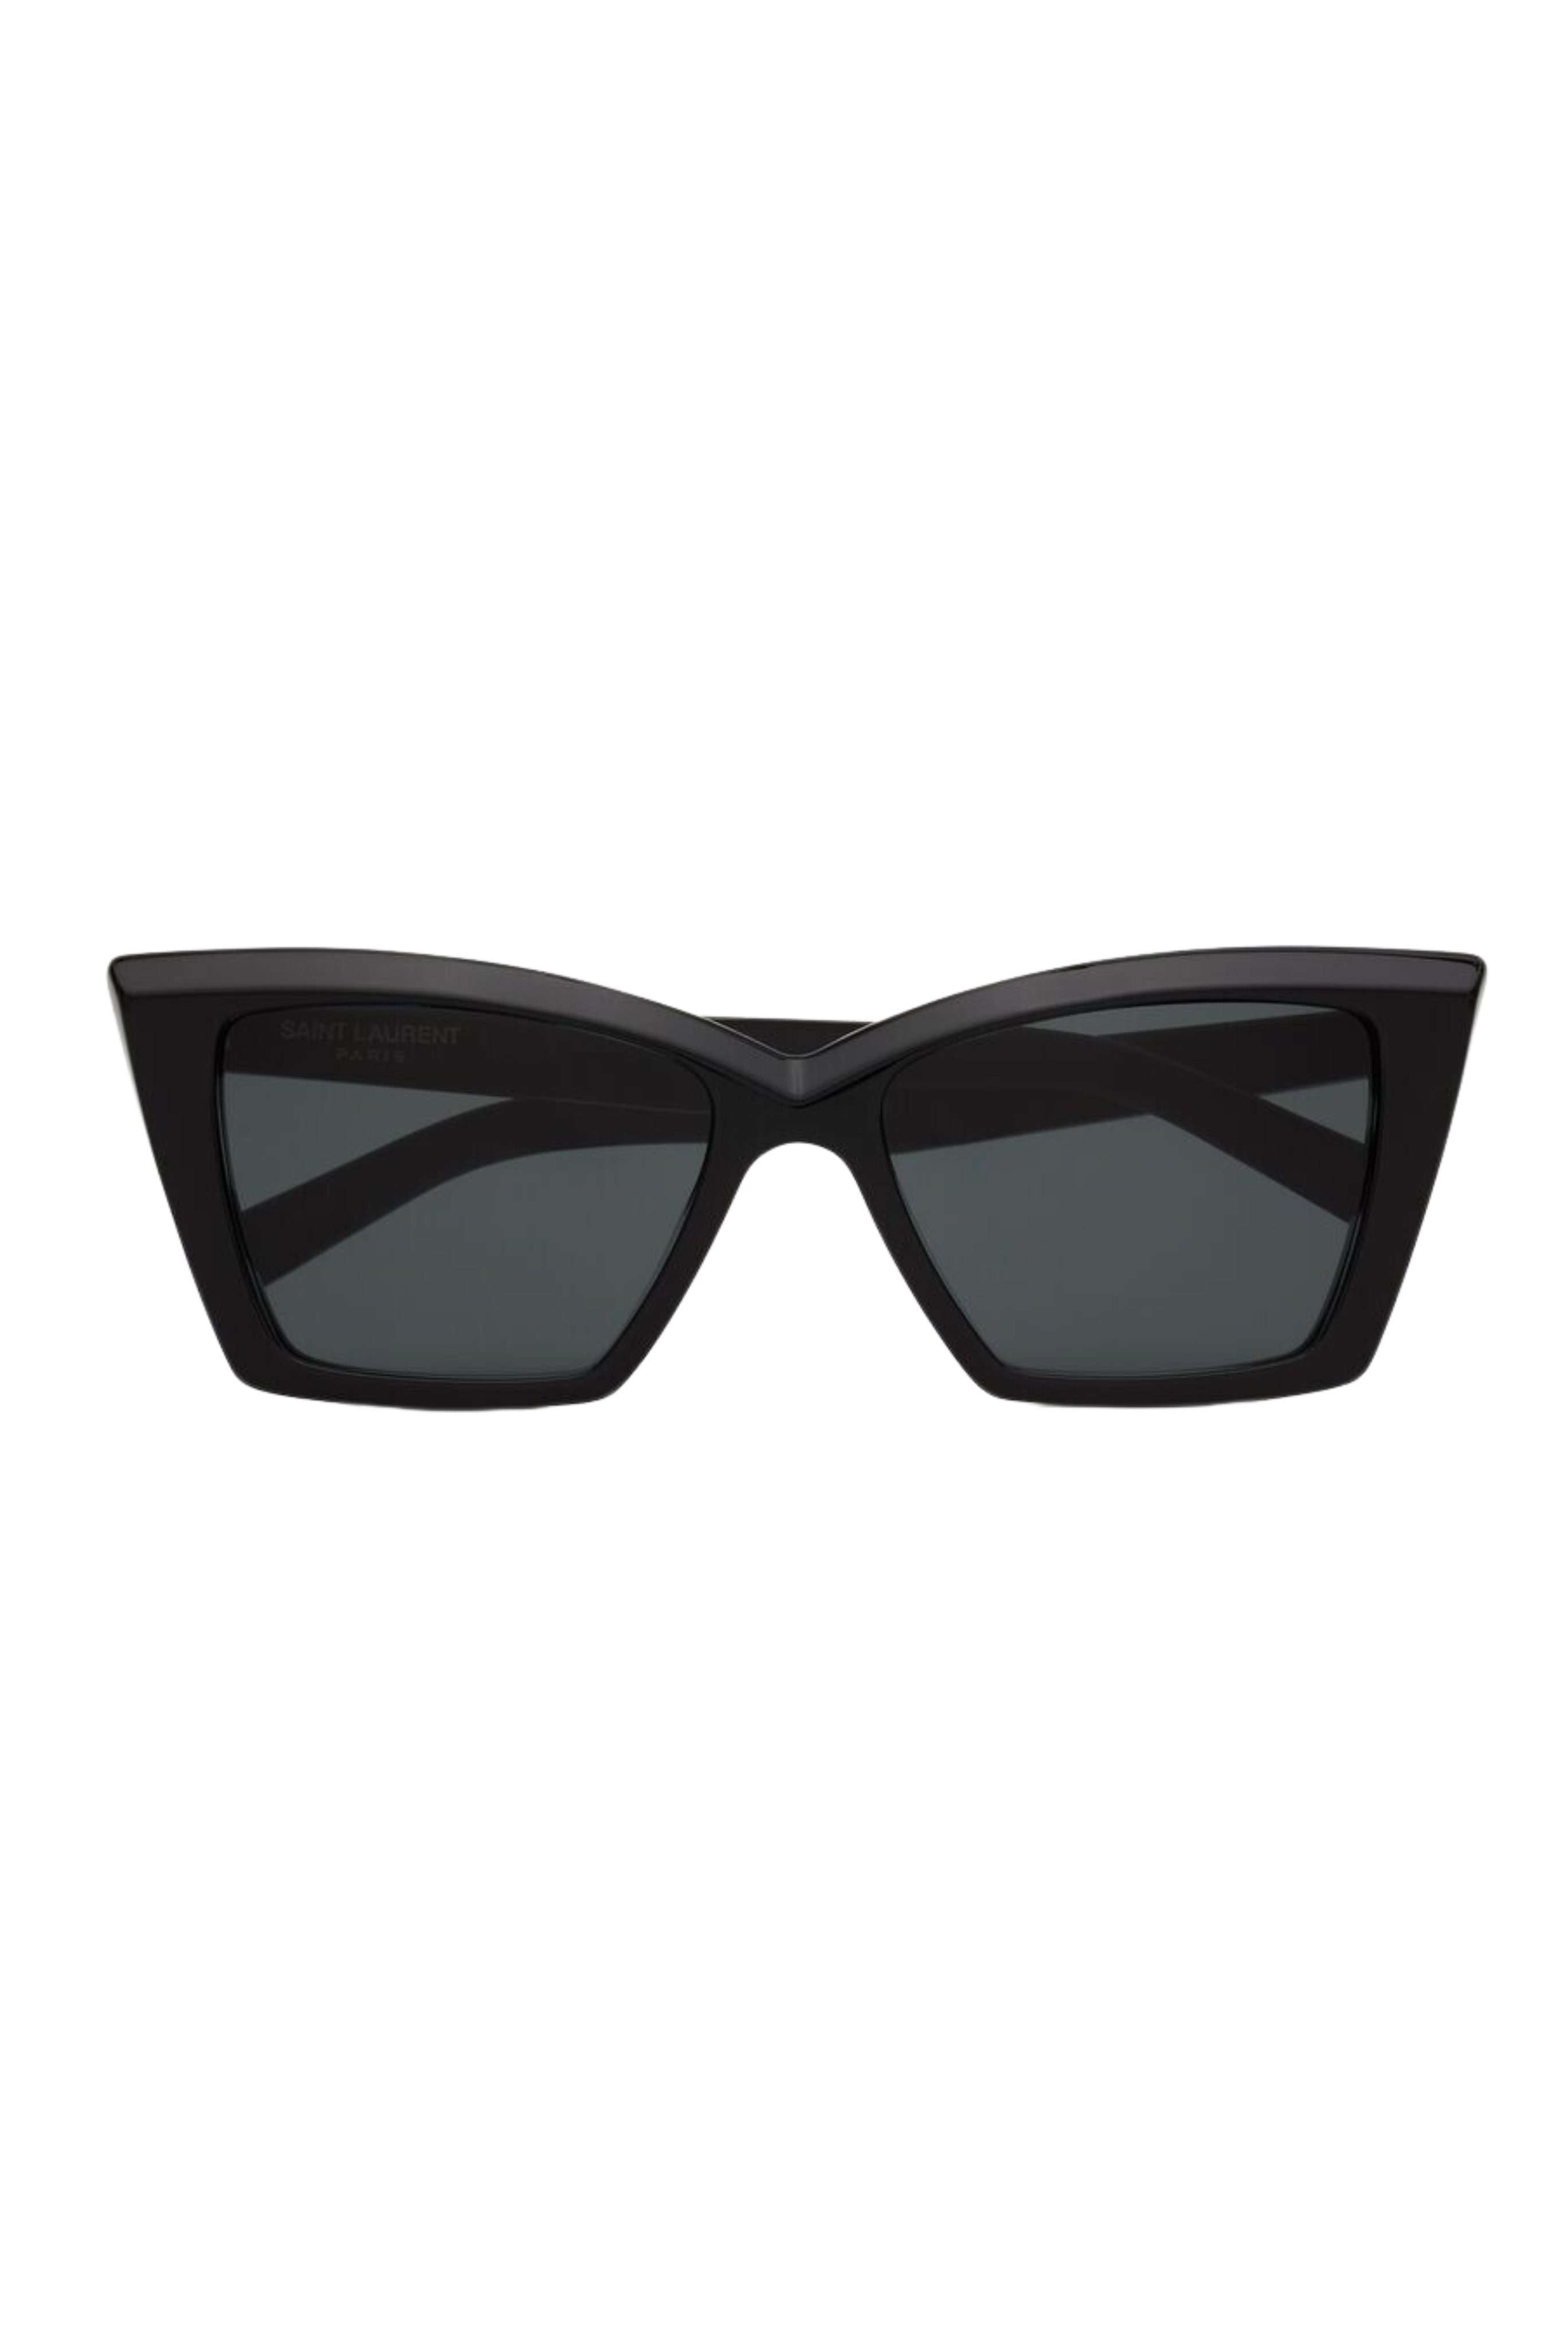 SAINT LAURENT Squared Cat Eye Frame Sunglasses